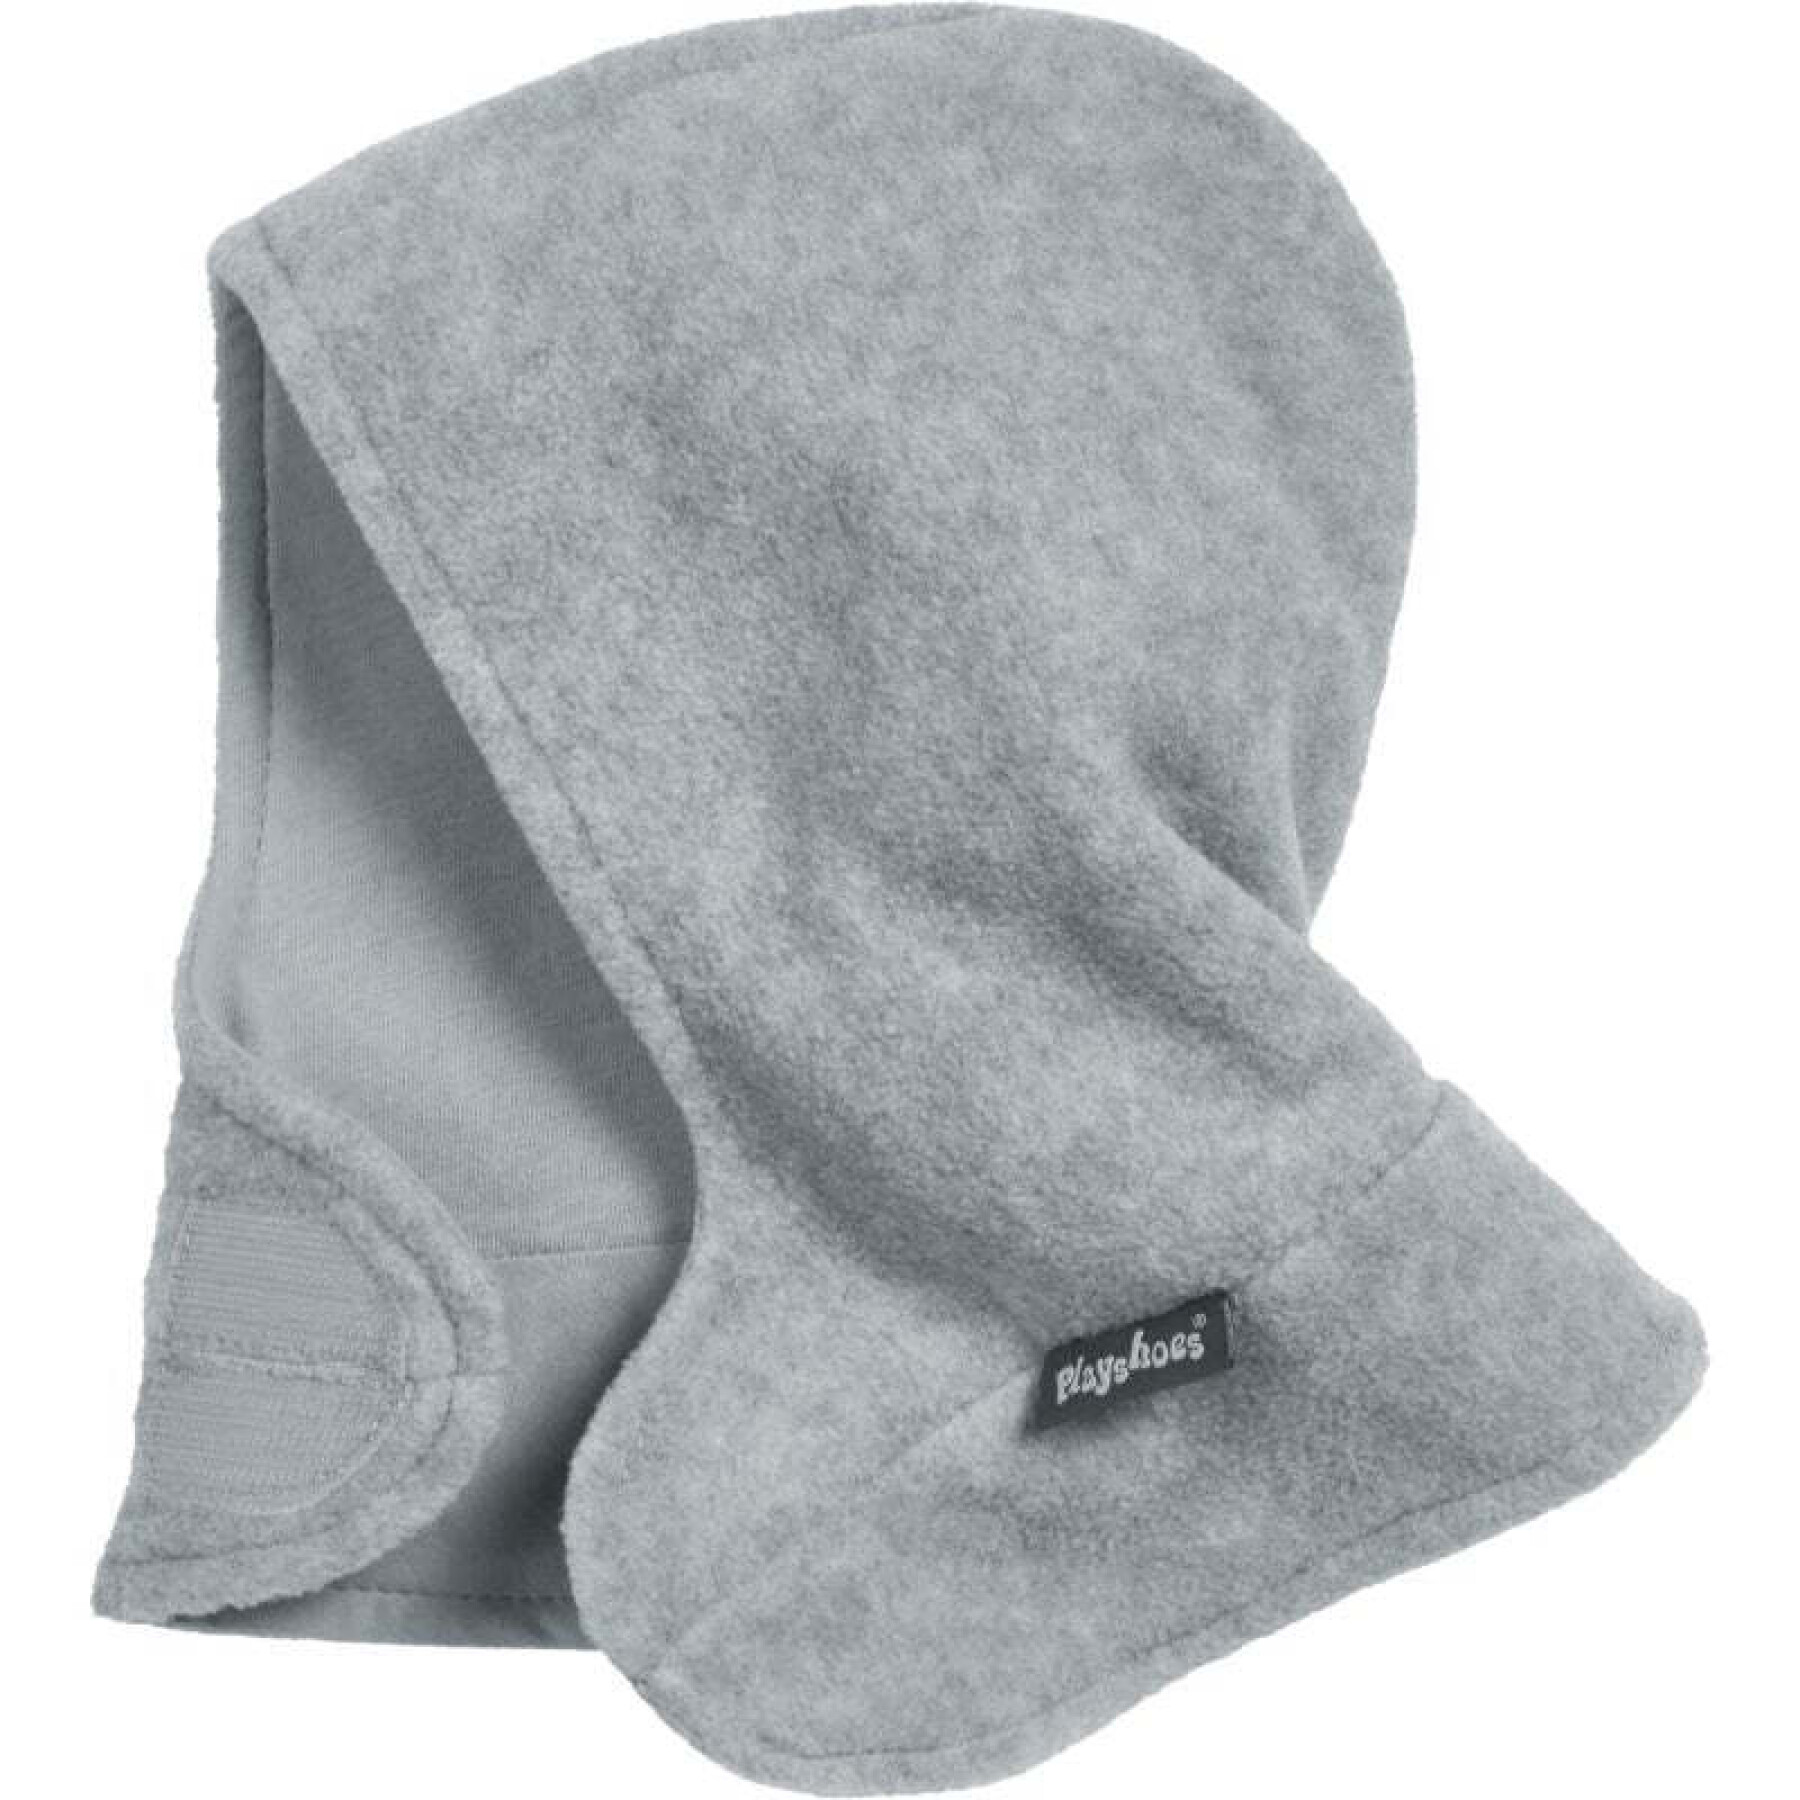 Children's polar fleece hat with hook and loop Playshoes